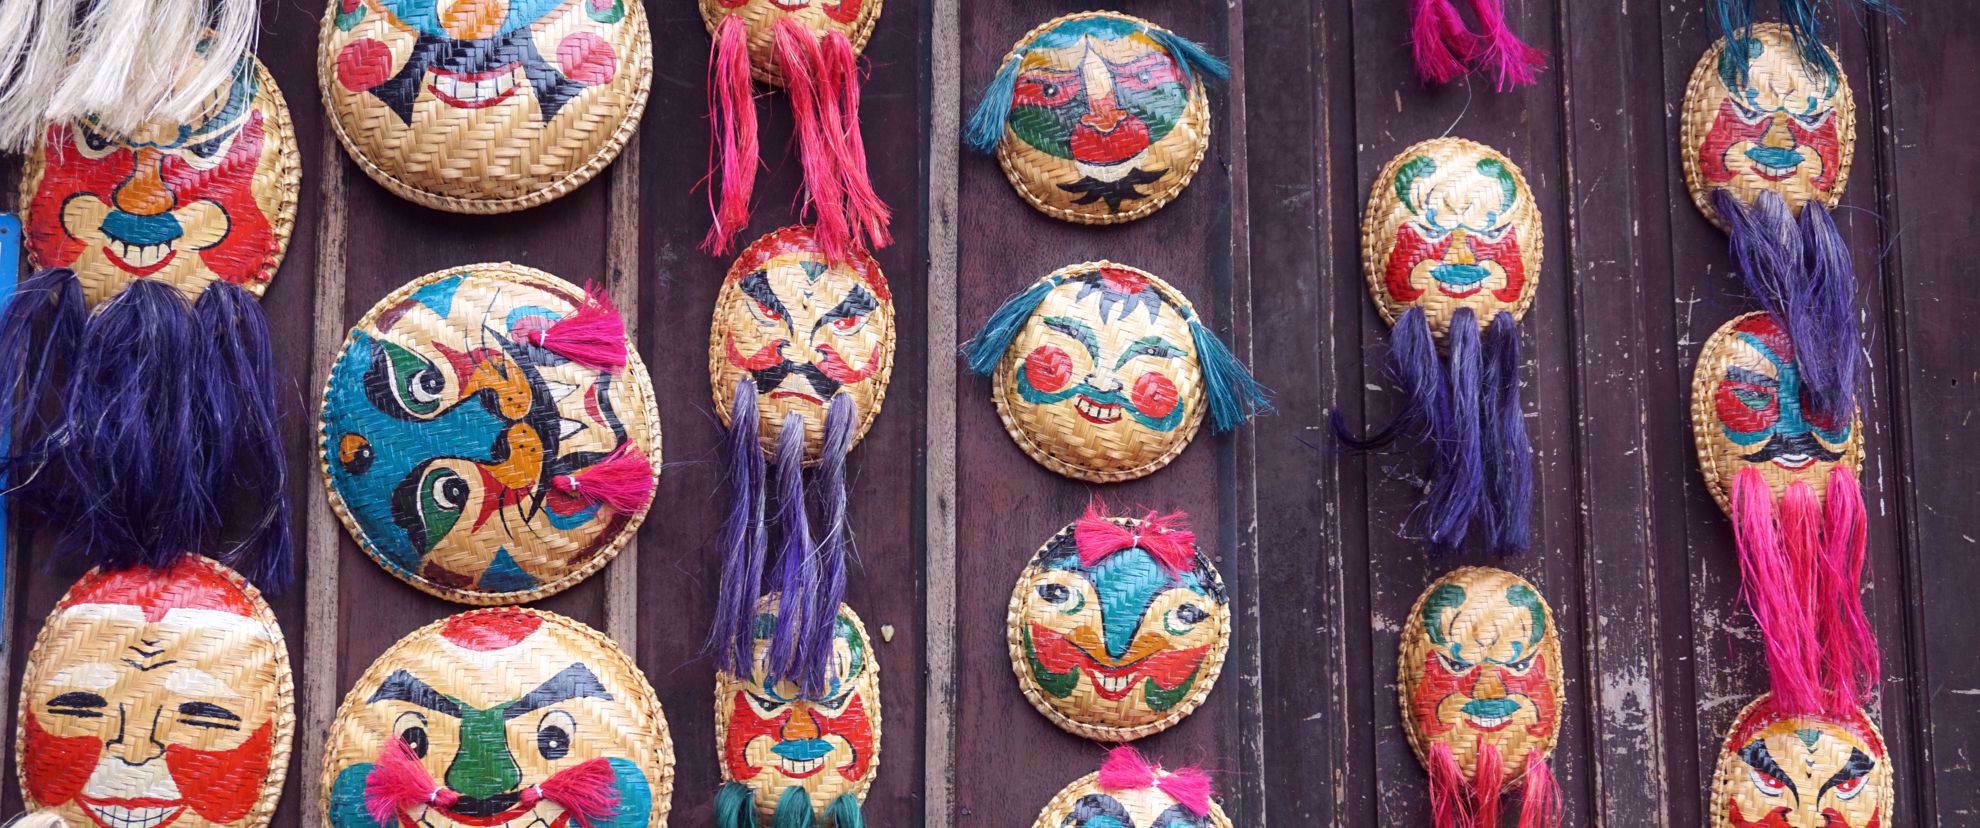 unique colorful masks in asia